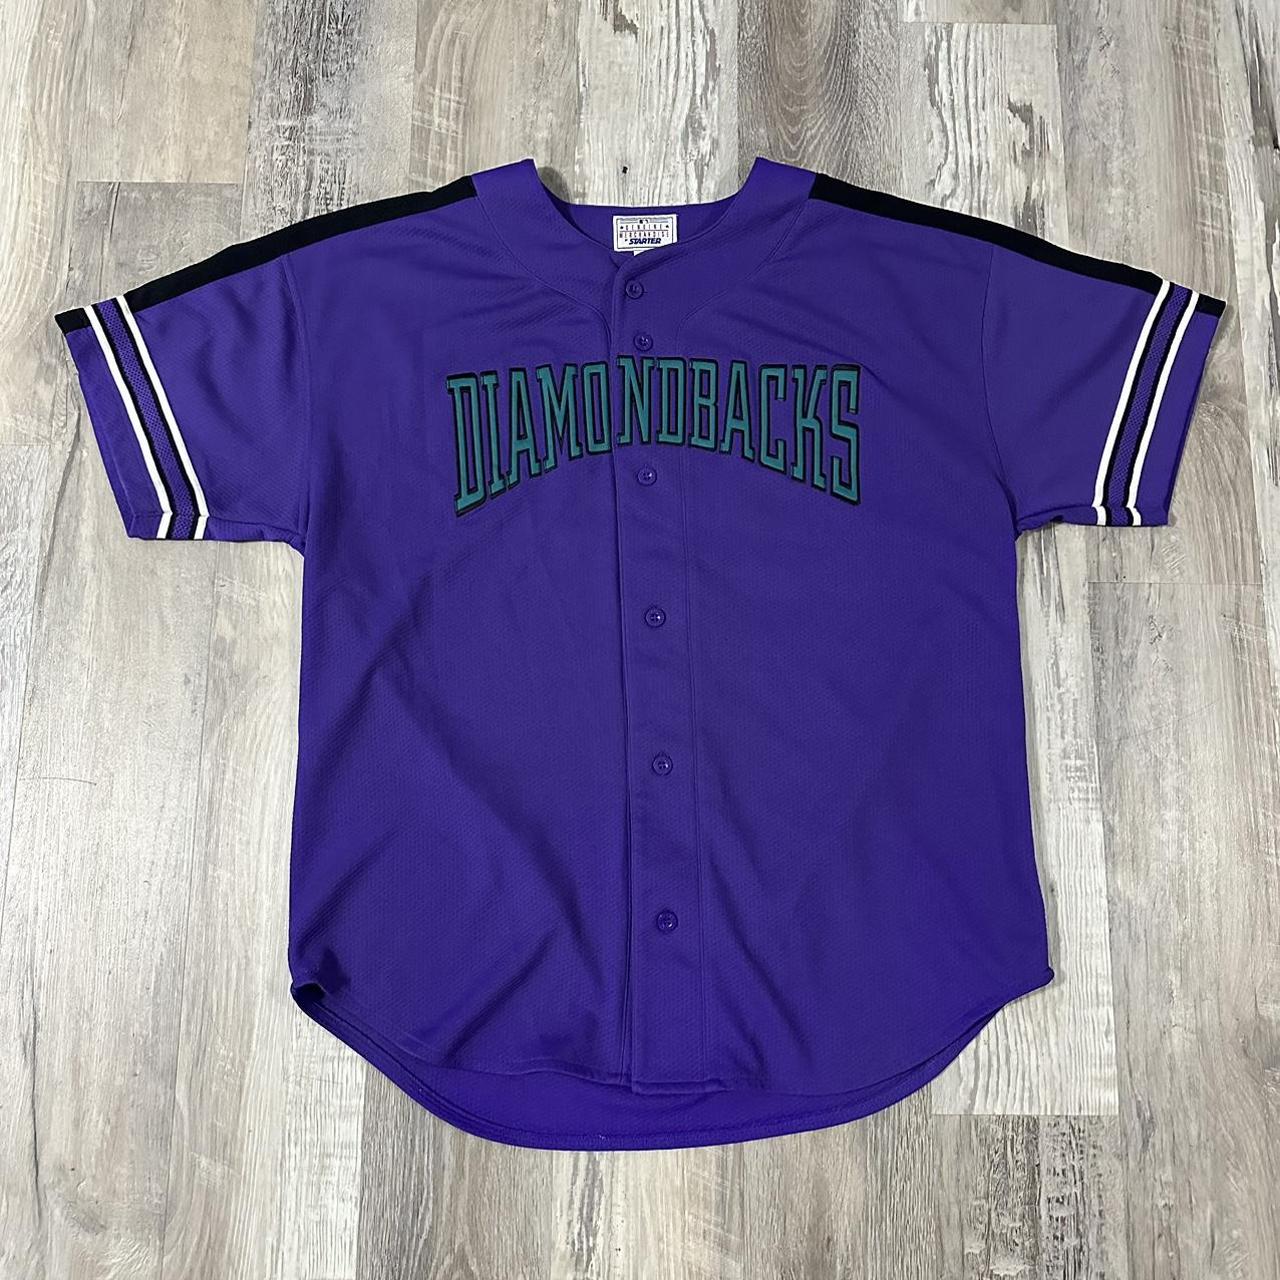 Vintage Arizona Diamondbacks baseball jersey made by Starter for